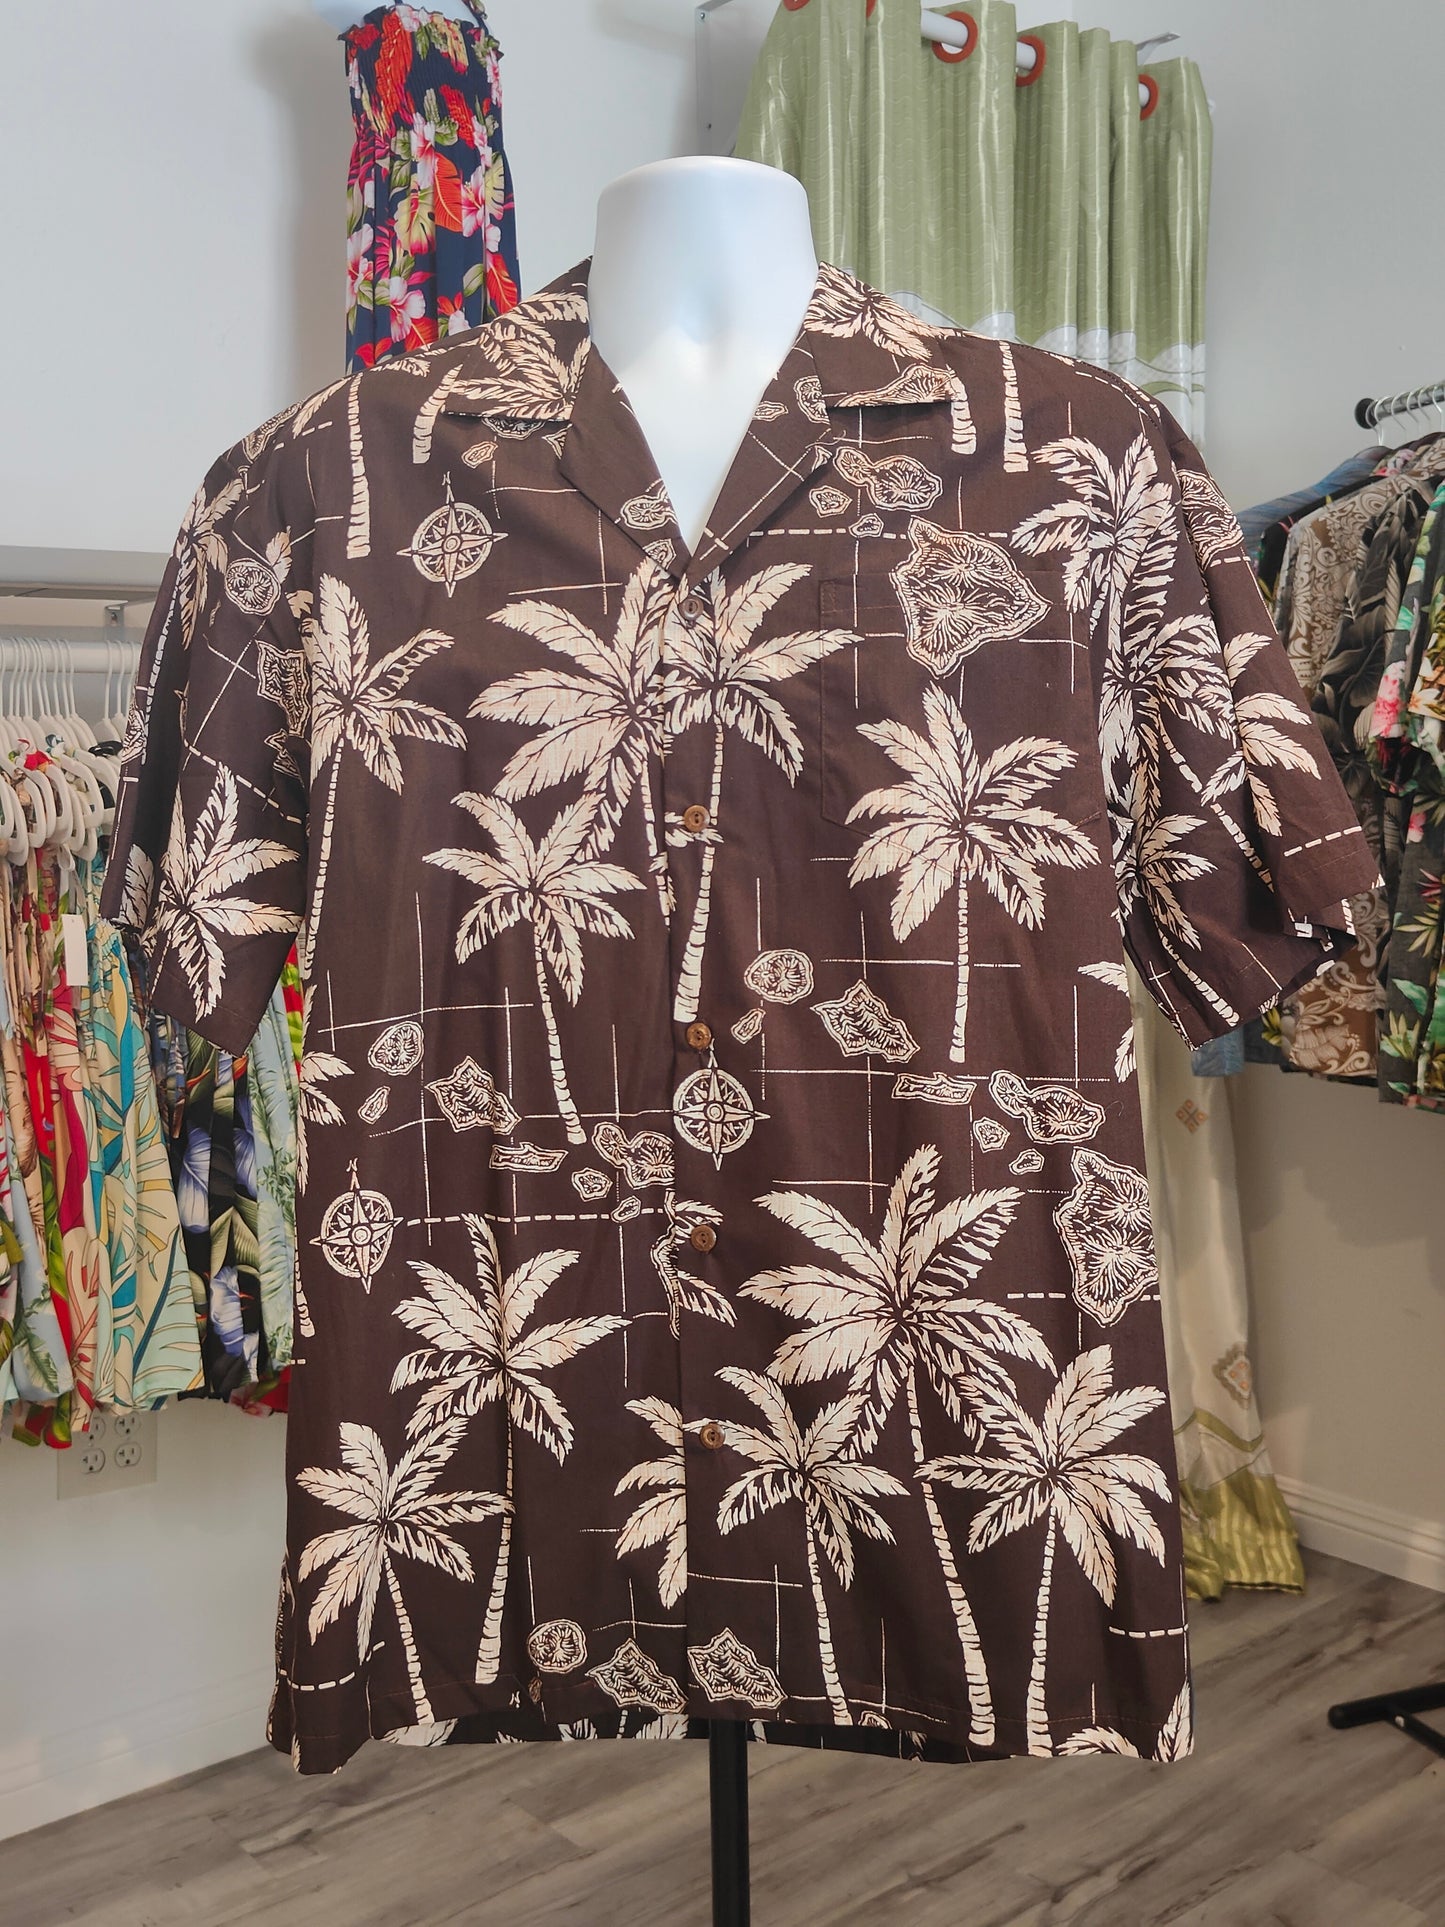 Cotton Aloha Shirts